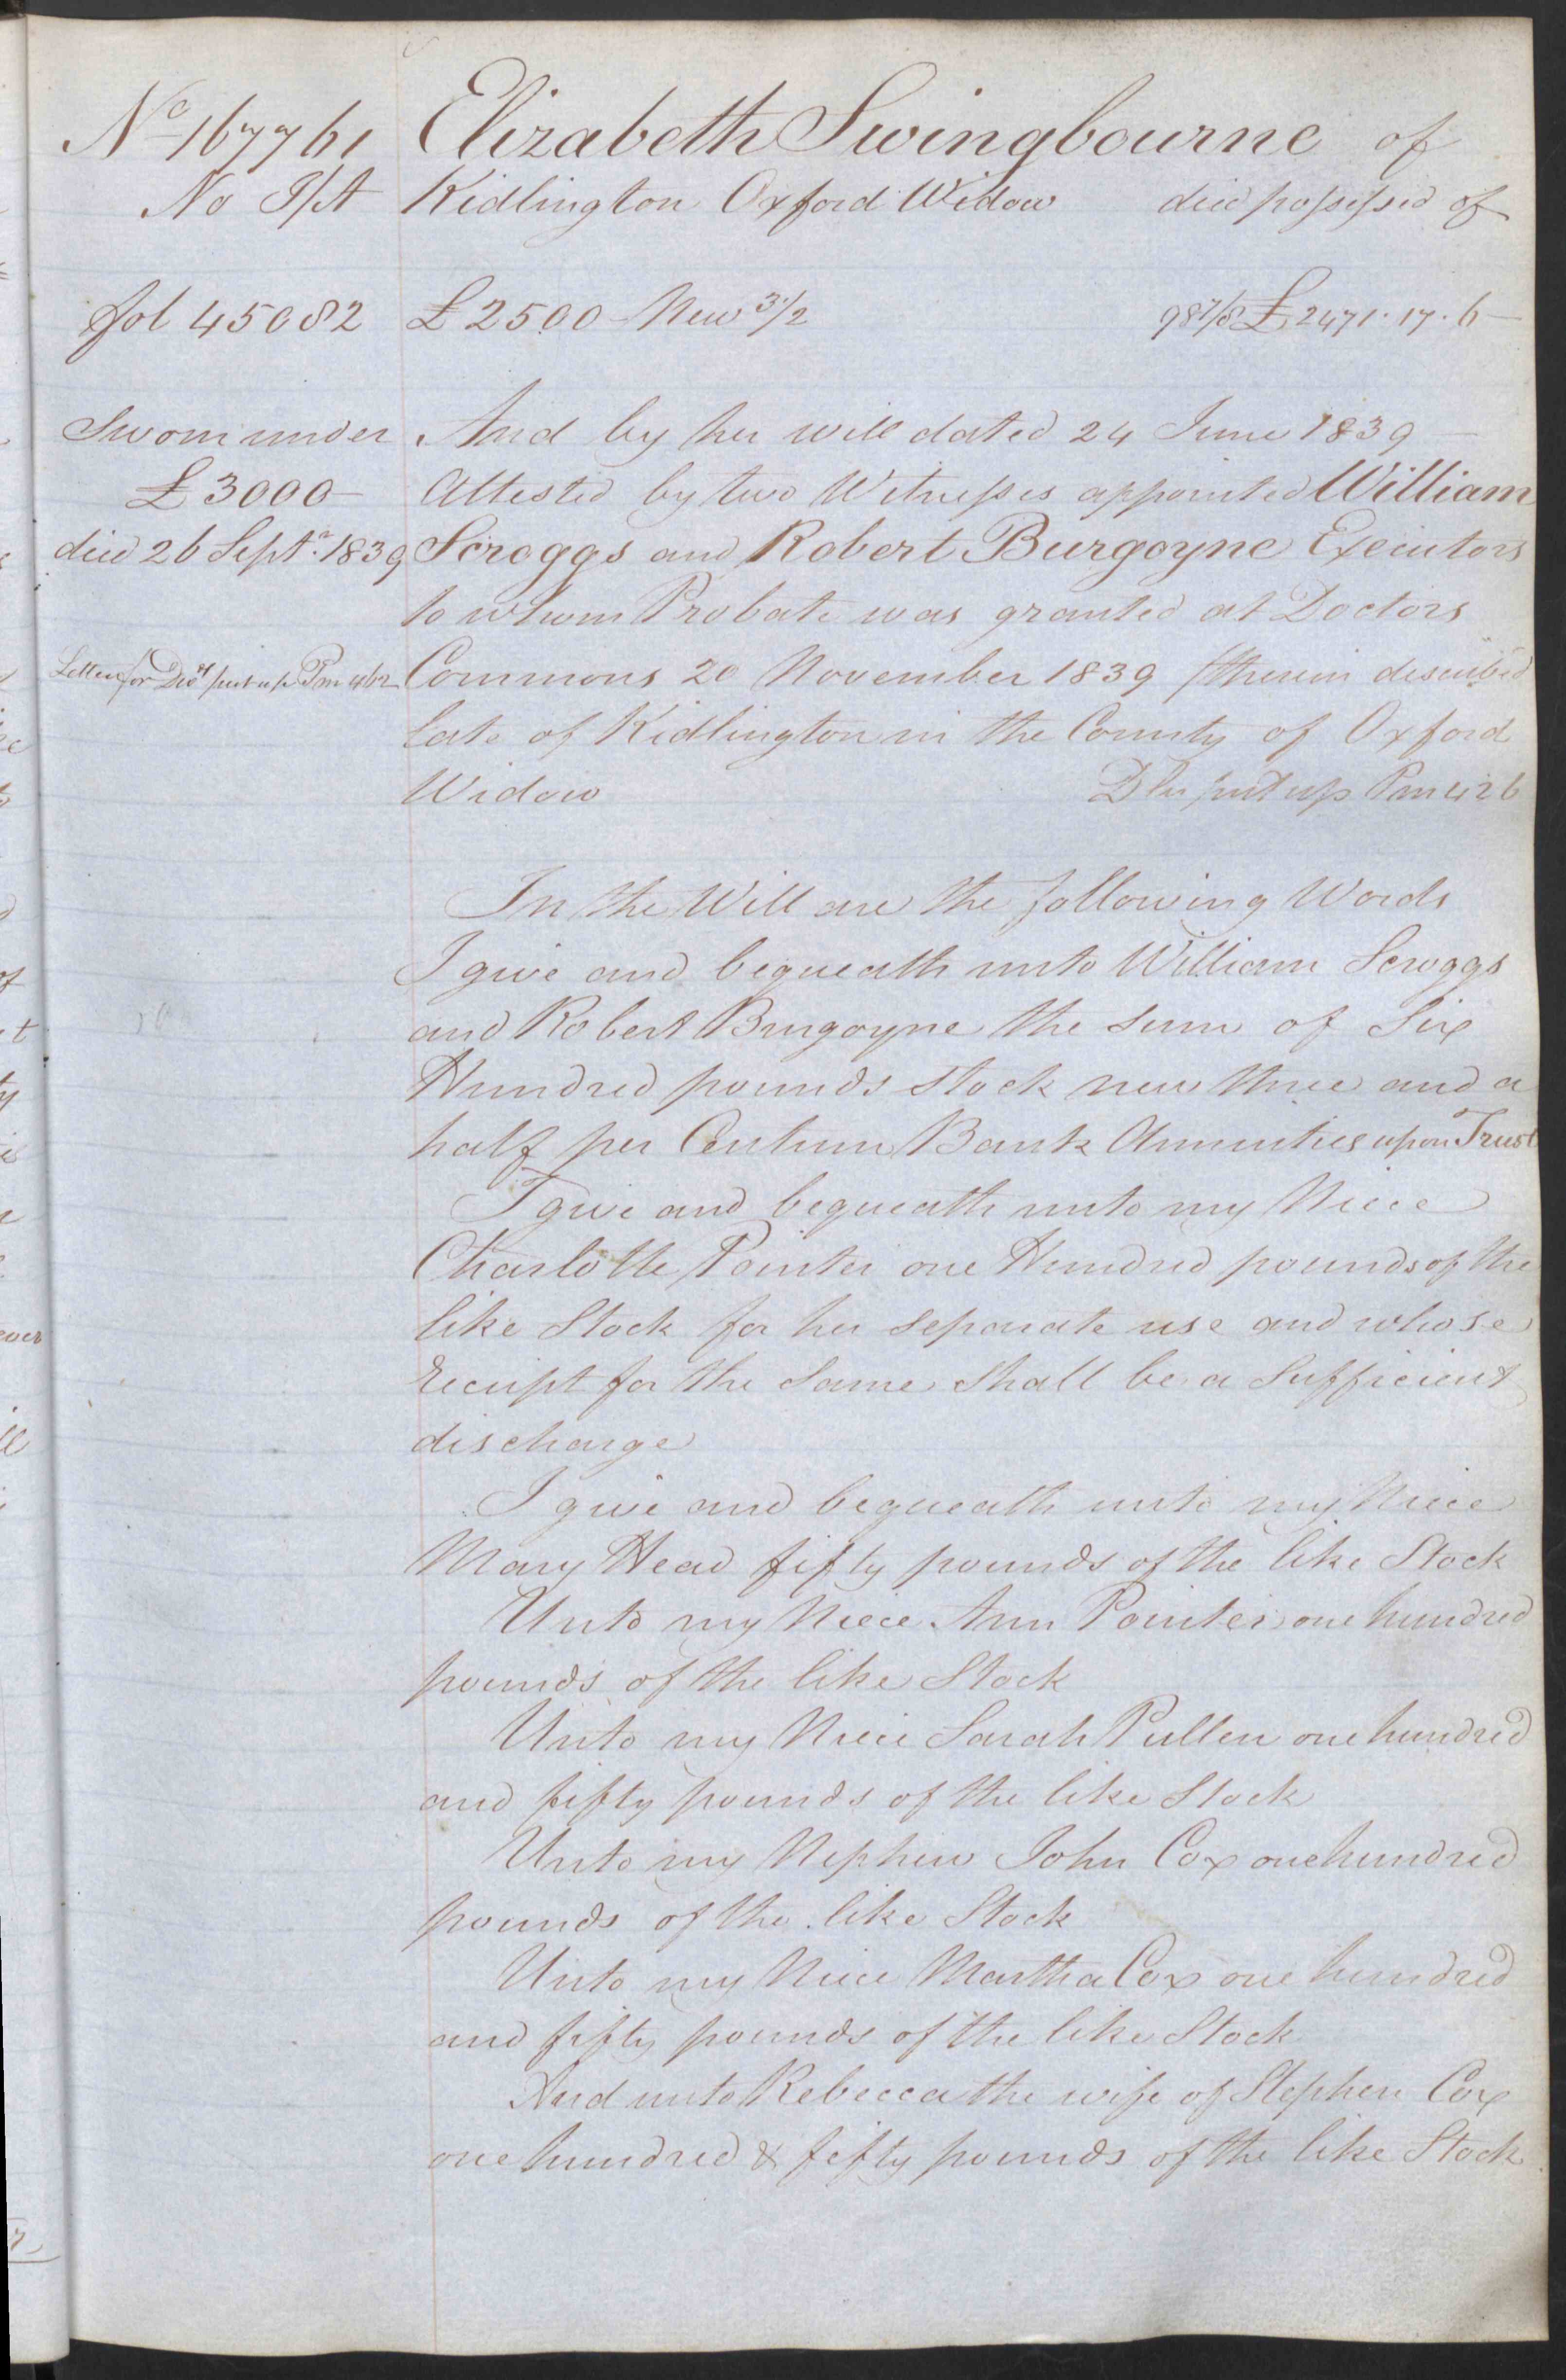 Will of Elizabeth Swingbourne 1839